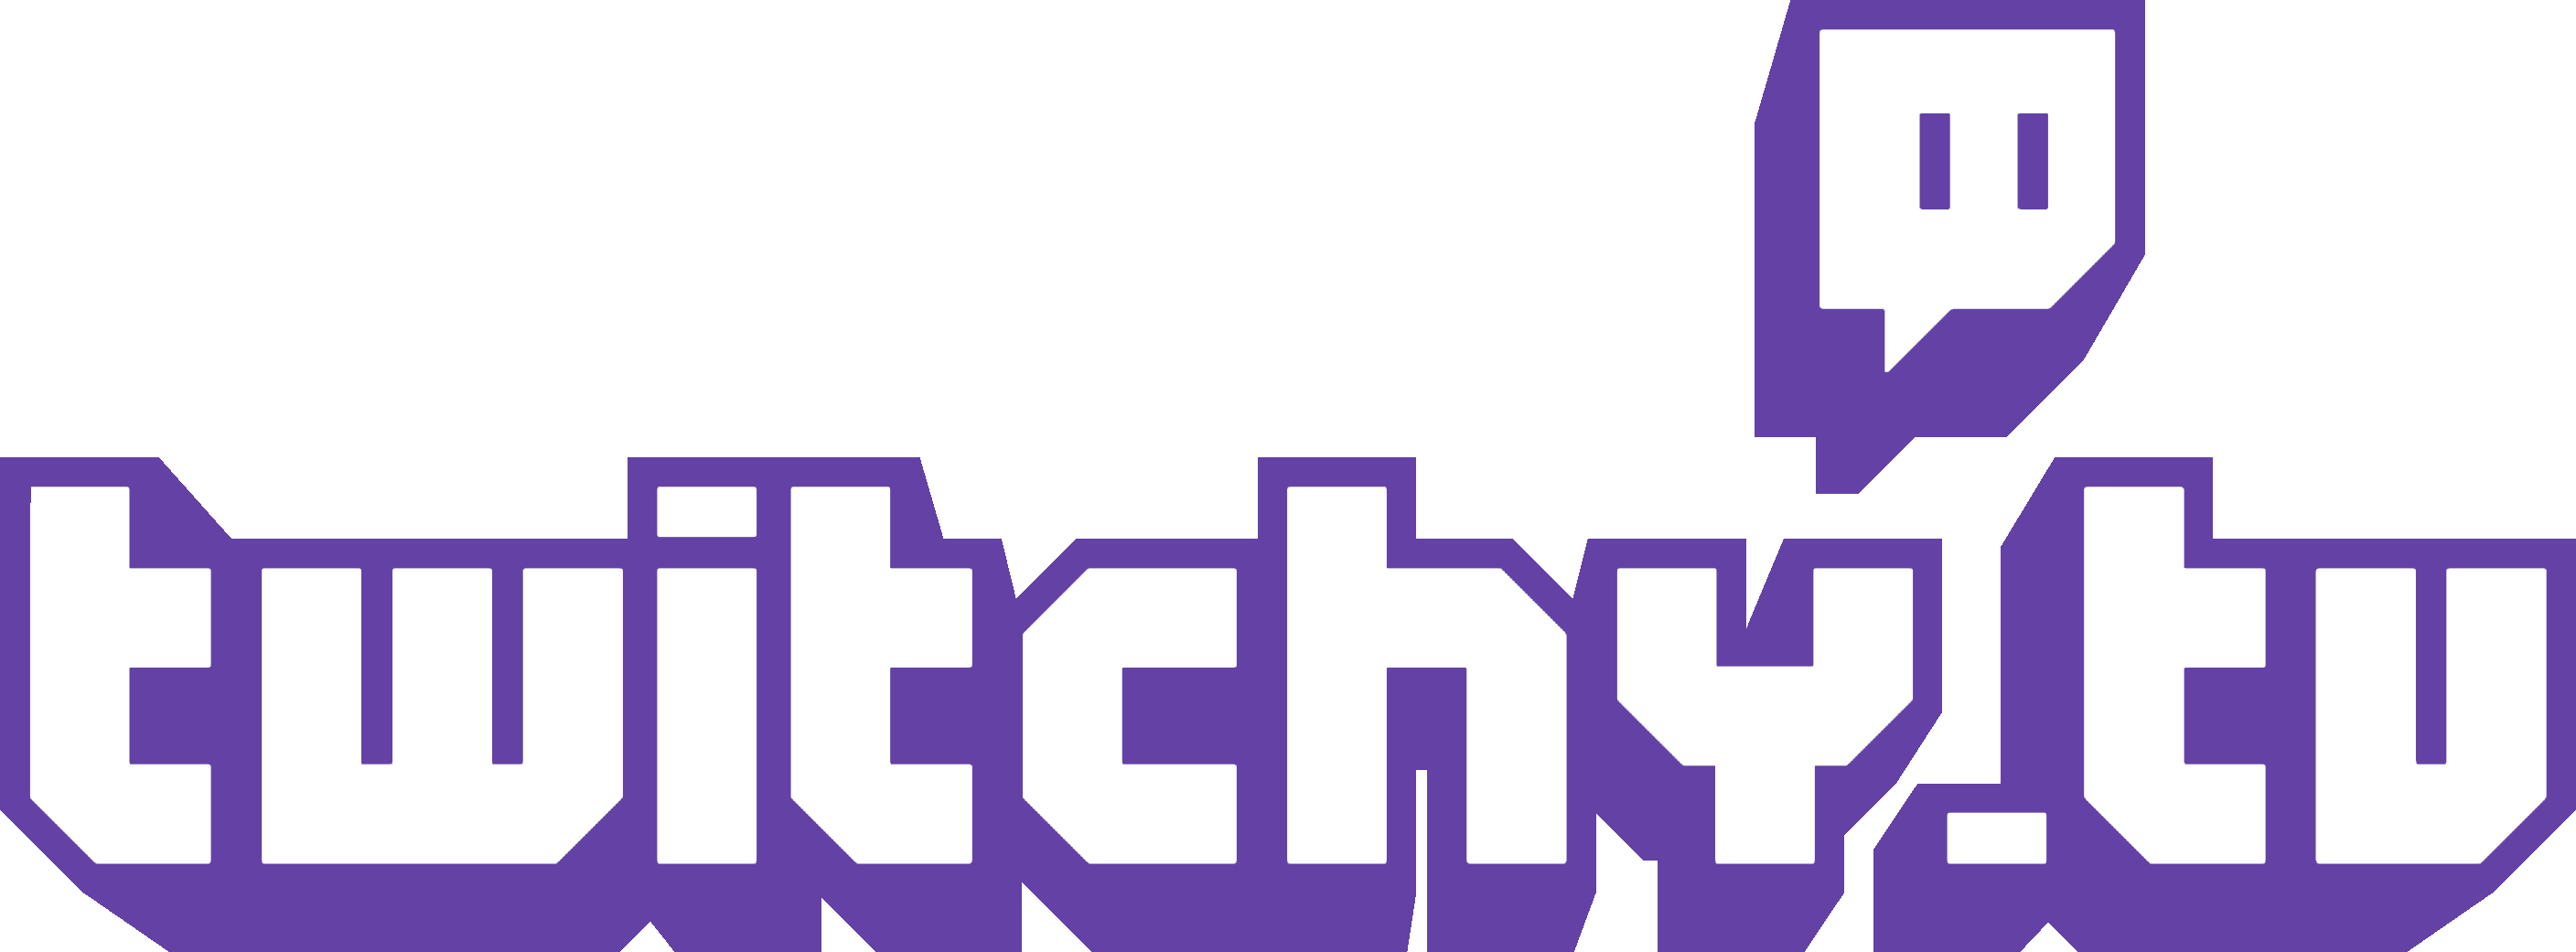 Twitch Logo Png.